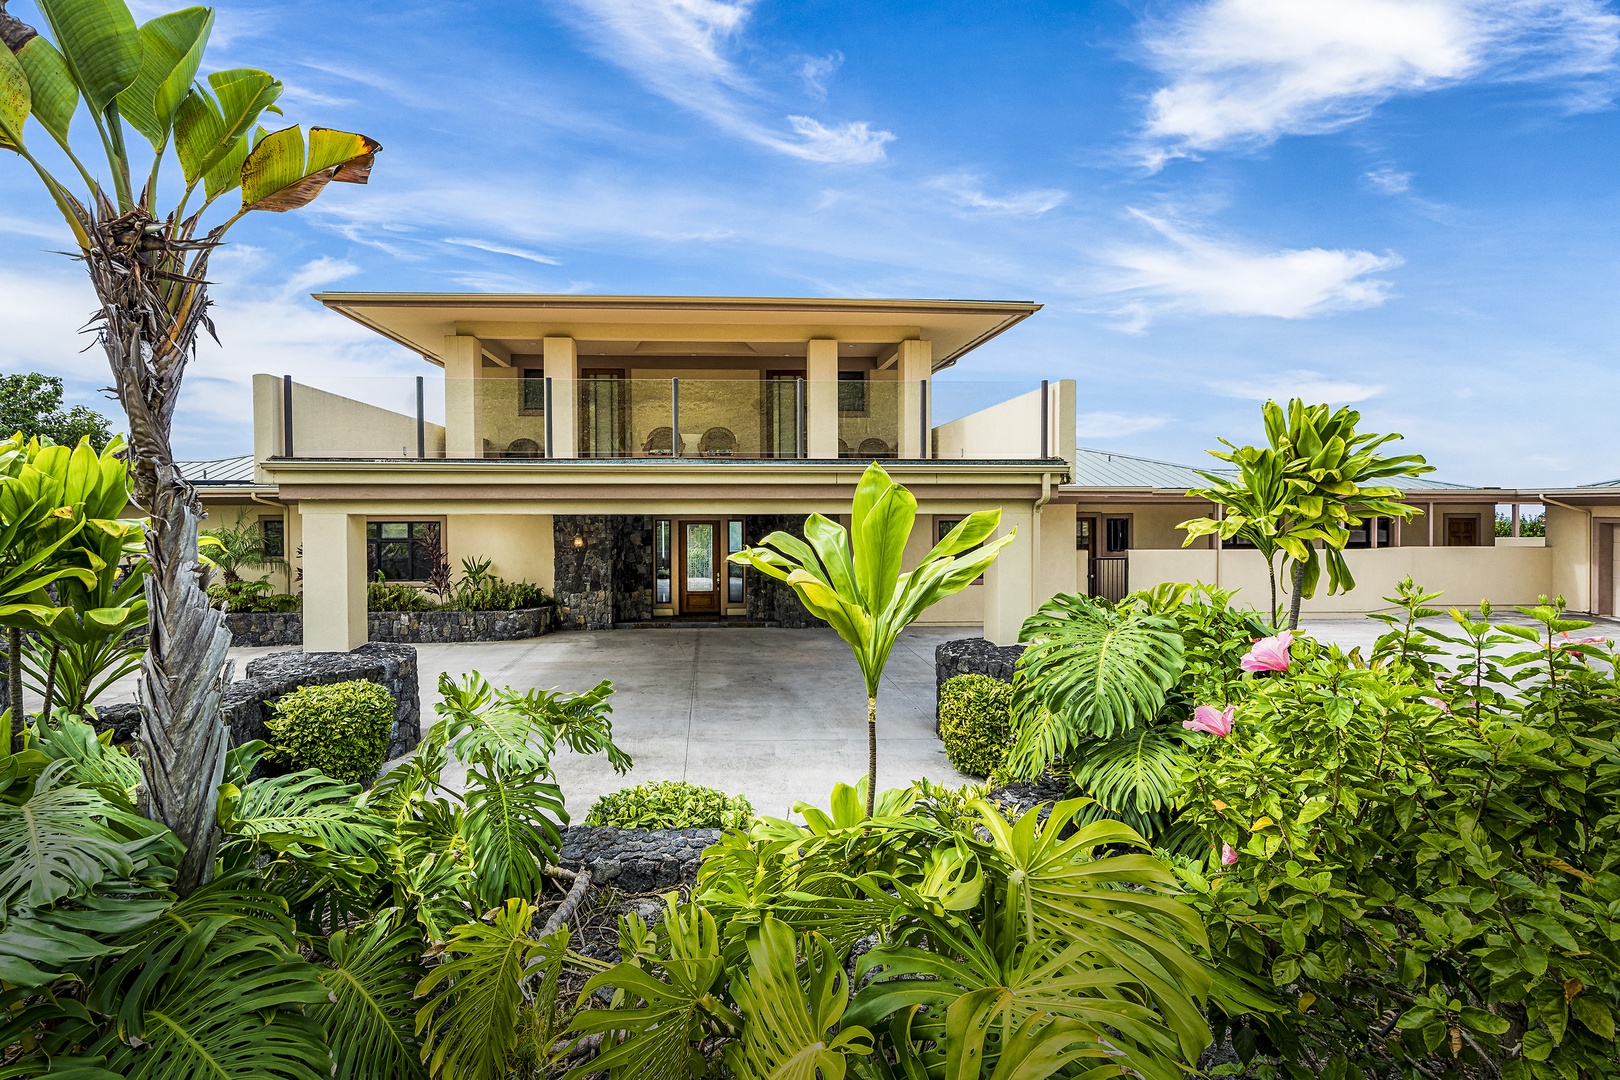 Kailua Kona Vacation Rentals, O'oma Plantation - Facing the East side of the home, showcasing the grandiose entry